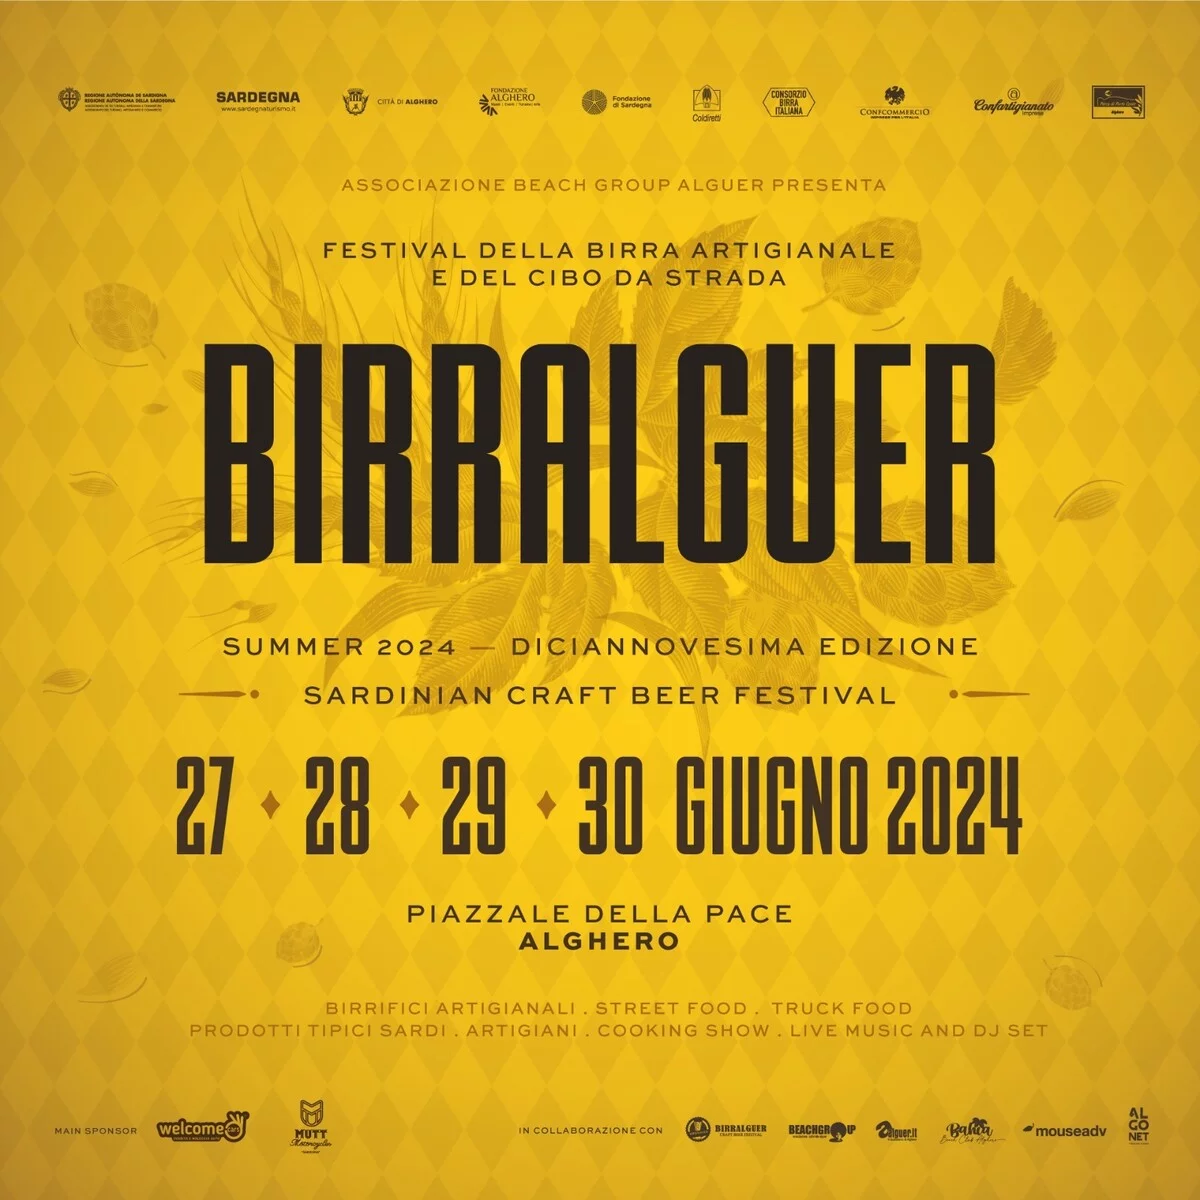 Birralguer Sardinian Craft Beer Festival